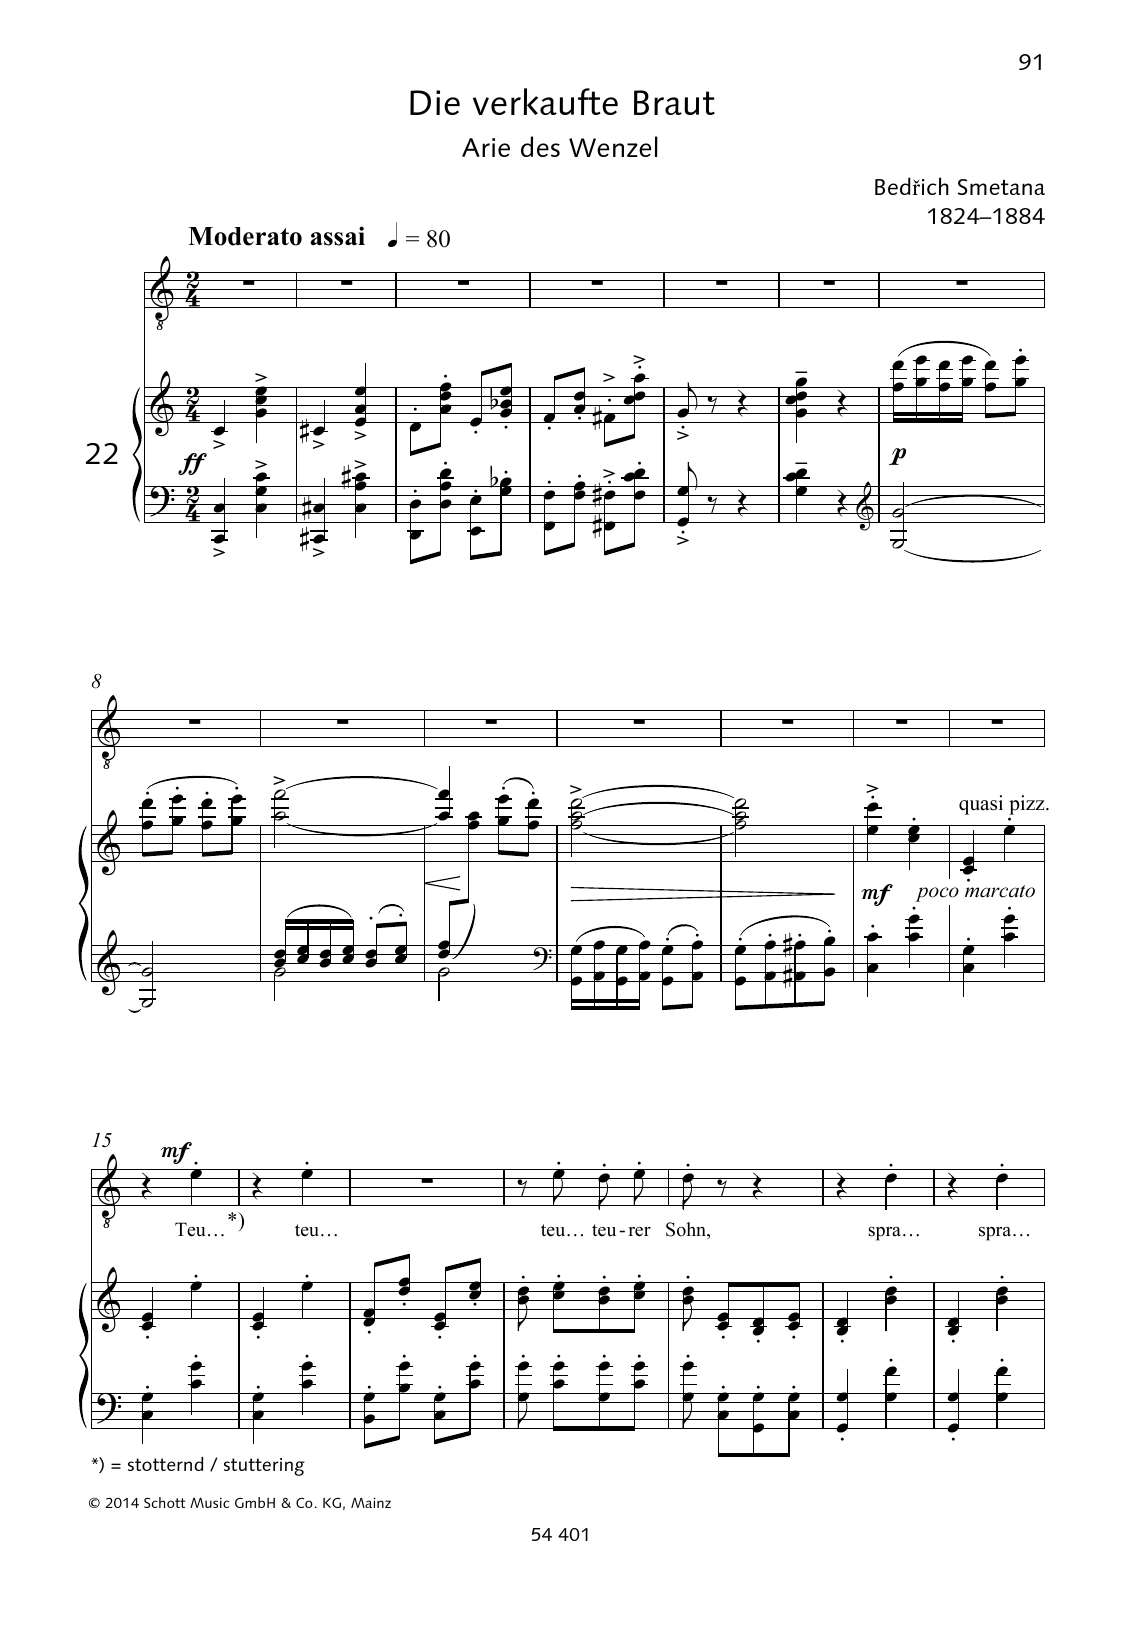 Download Bedrich Smetana Teu... teu... teu... teurer Sohn Sheet Music and learn how to play Piano & Vocal PDF digital score in minutes